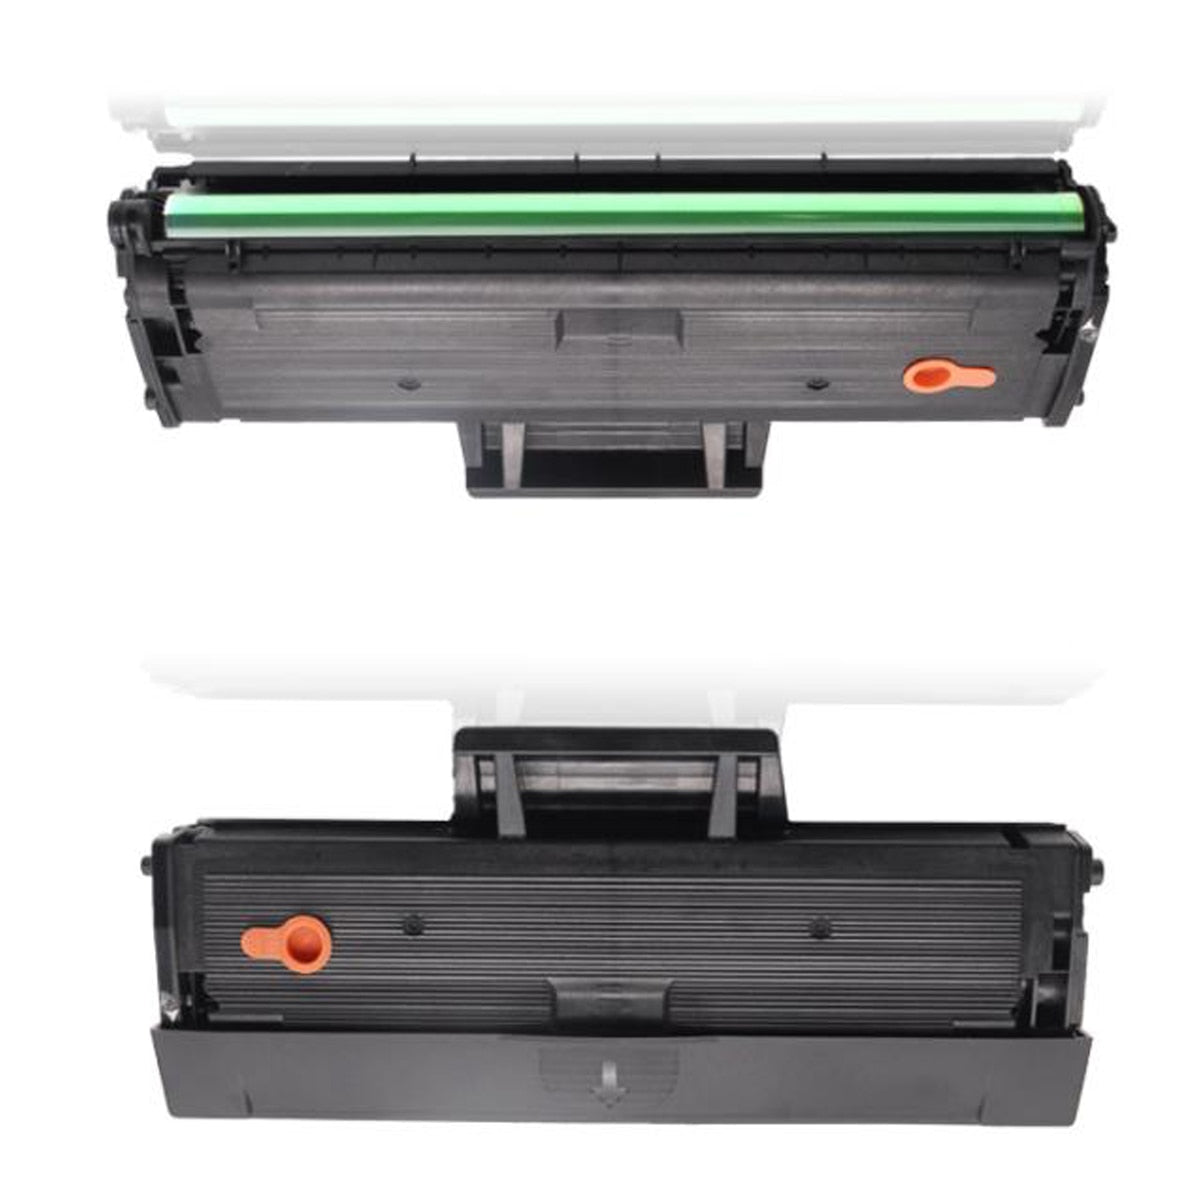 106R02773 650N05407 Toner Cartridge KIT for Xerox WorkCentre 3025 Phaser 3020 P3020 WC 3025BI Laser Printer Refill Toner Powder